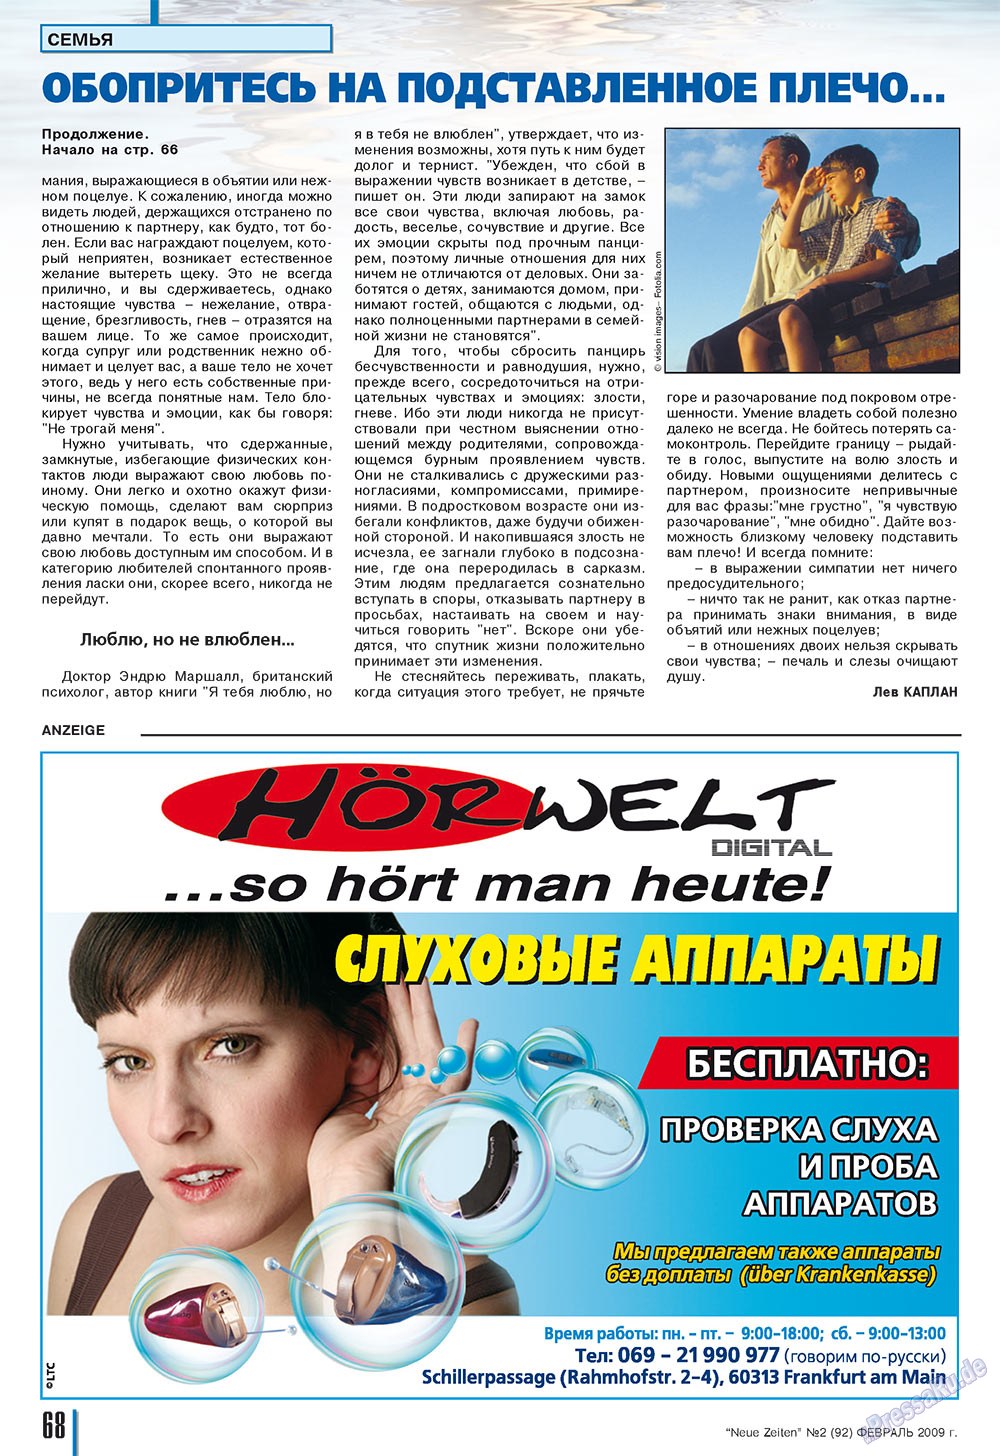 Neue Zeiten (журнал). 2009 год, номер 2, стр. 68